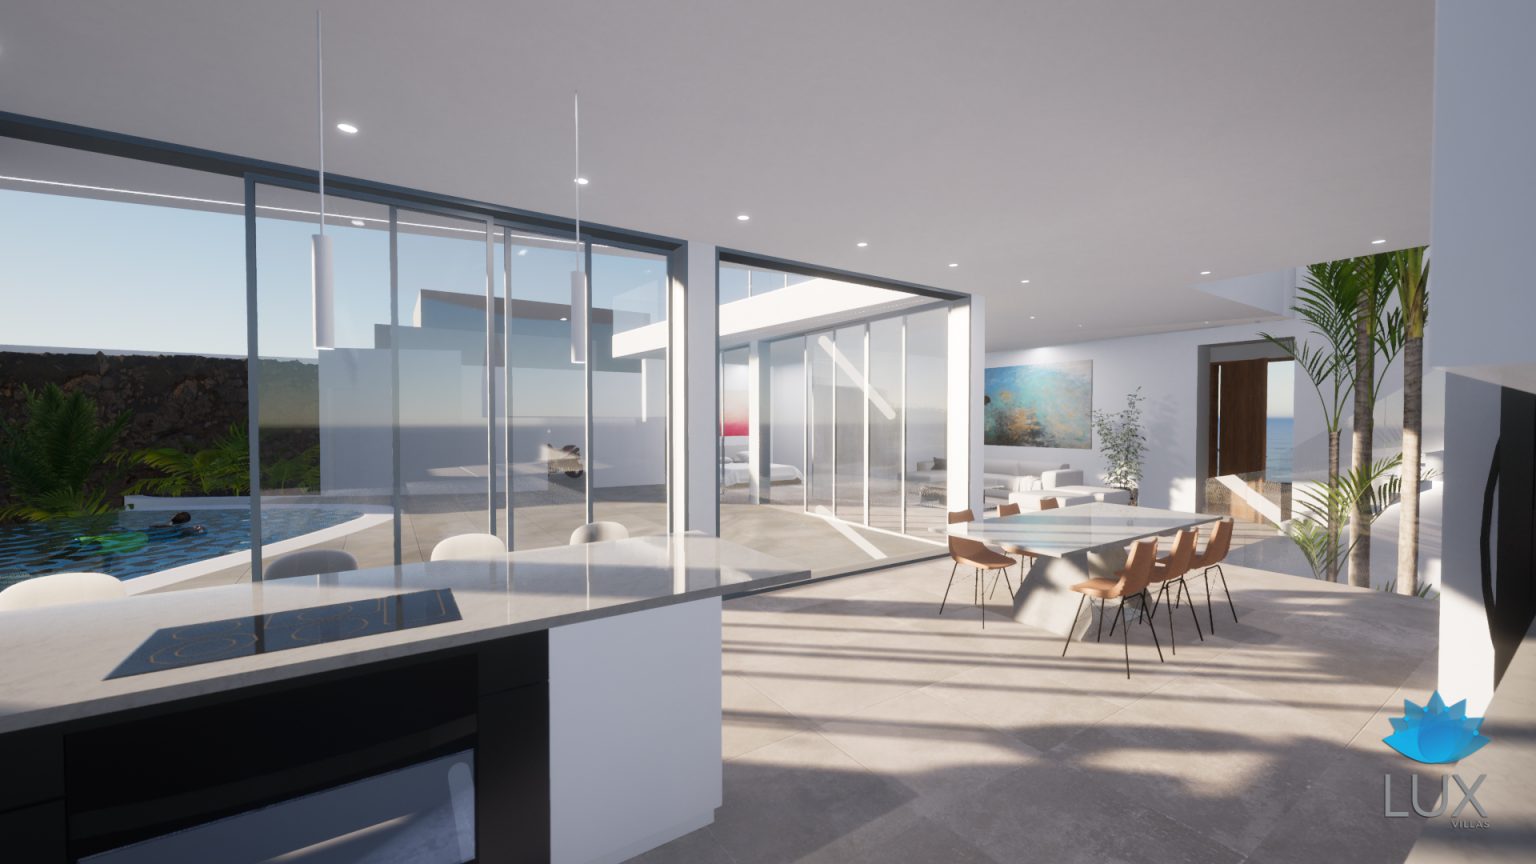 new built luxury villa roque conde costa adeje tenerife south modern minimalist pool (11)